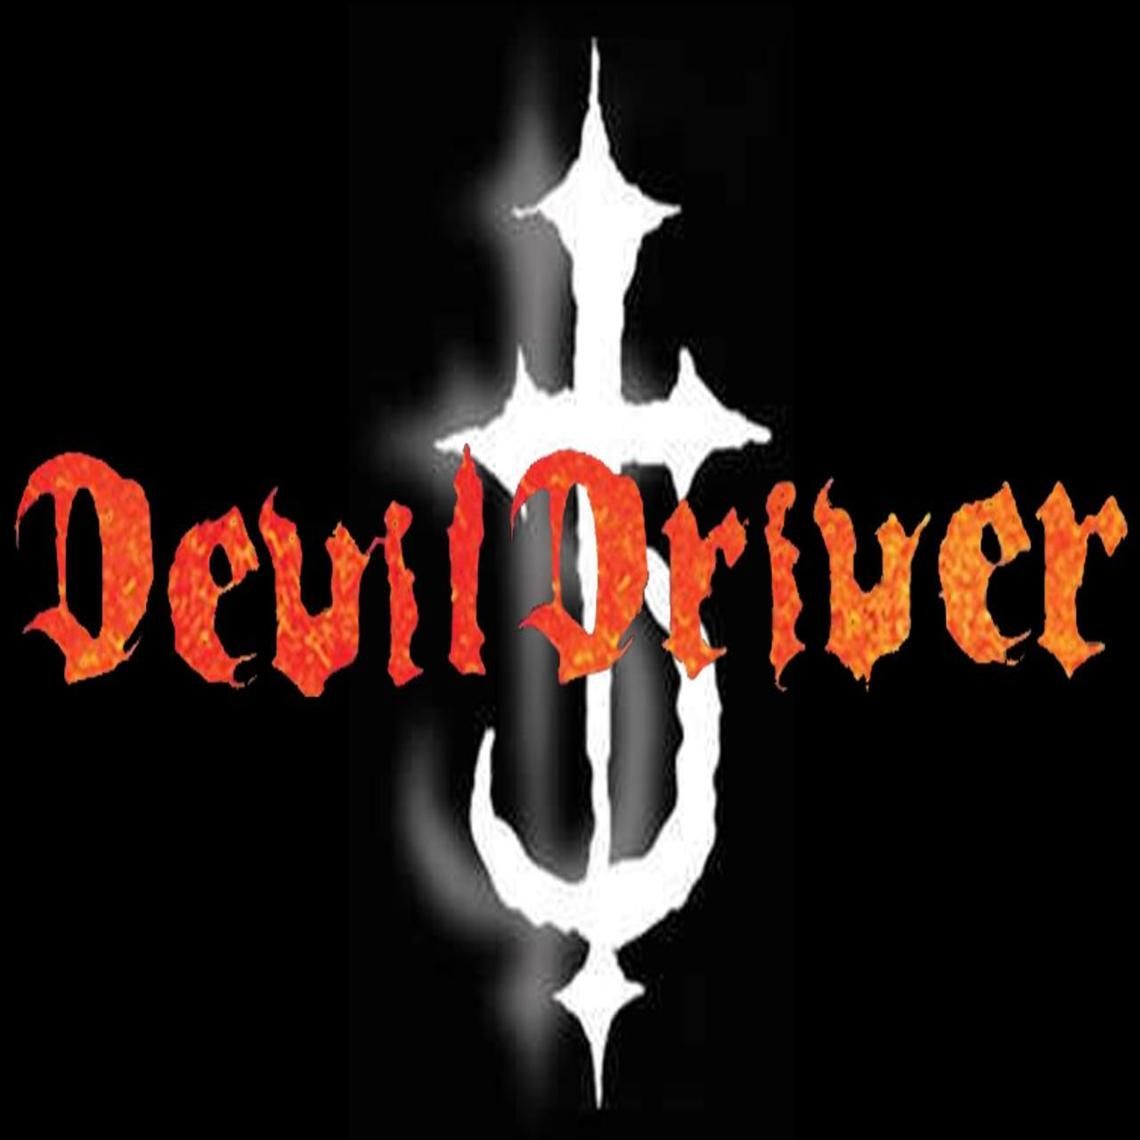 DevilDriver. Heavy metal, Neon signs, Neon